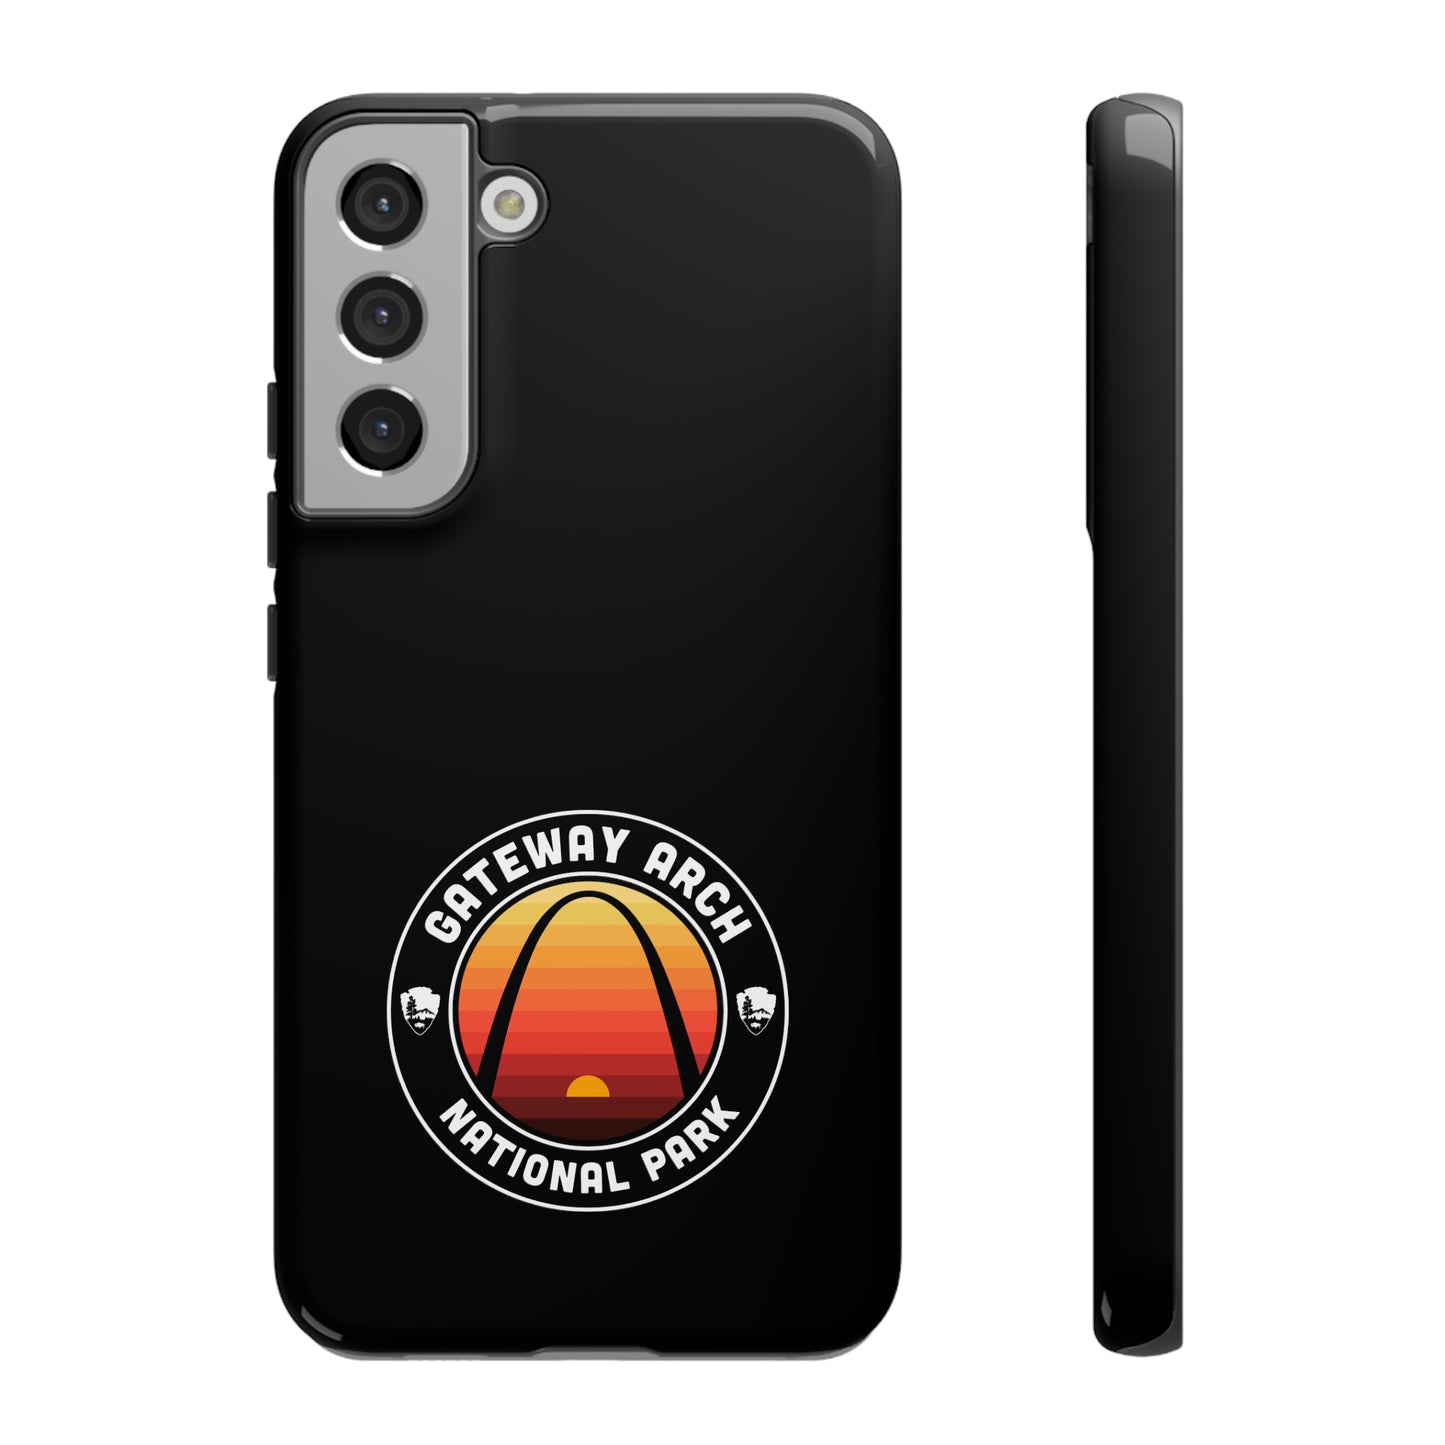 Gateway Arch National Park Phone Case - Round Emblem Design